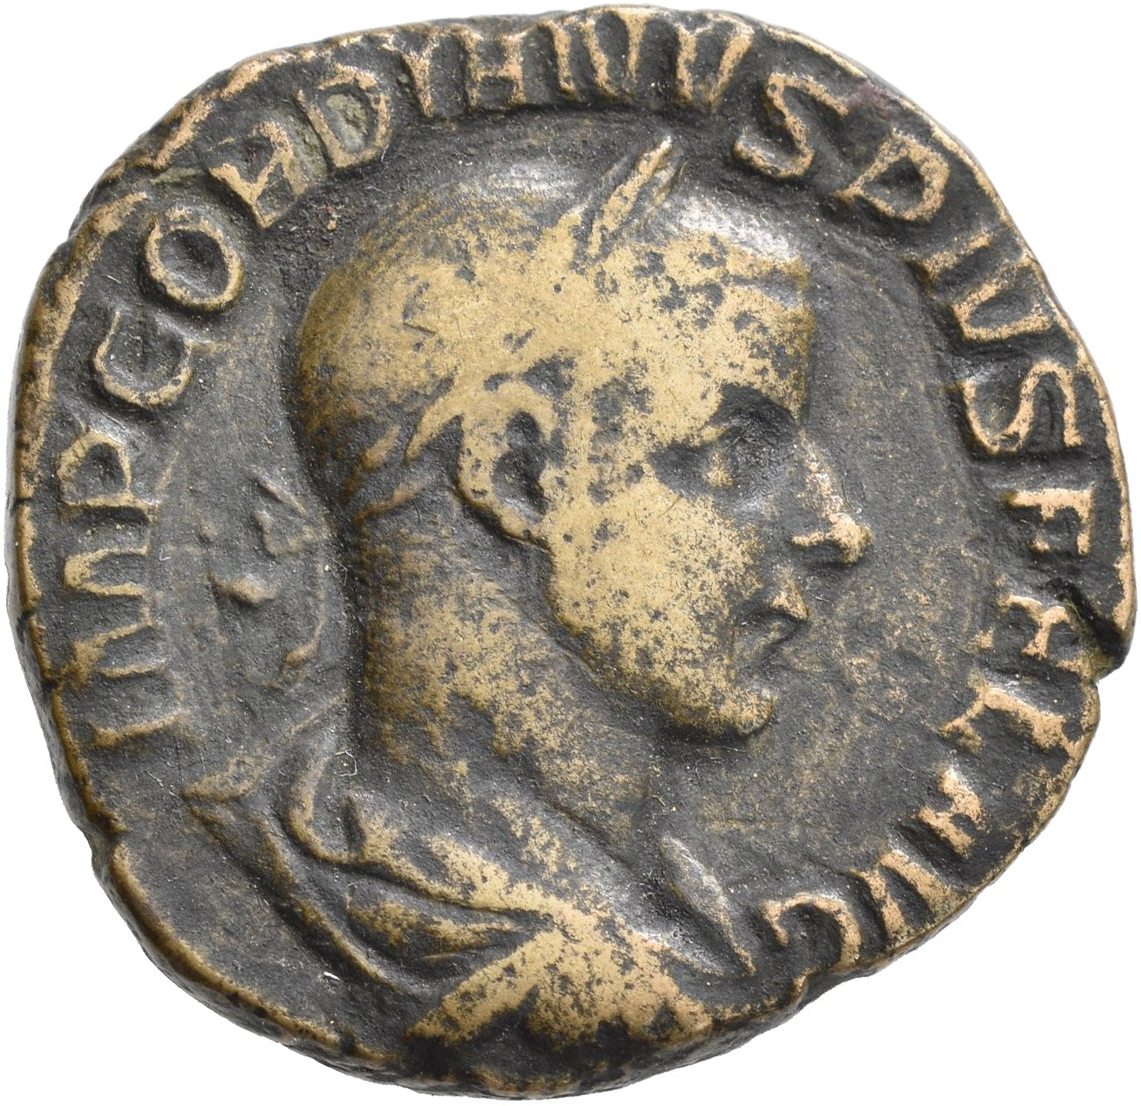 Lot 13021 - Gordianus III. (238 - 244) | Antike - Rom - Kaiserzeit  -  Auktionshaus Christoph Gärtner GmbH & Co. KG 53rd AUCTION - Day 6 Coins/Banknotes